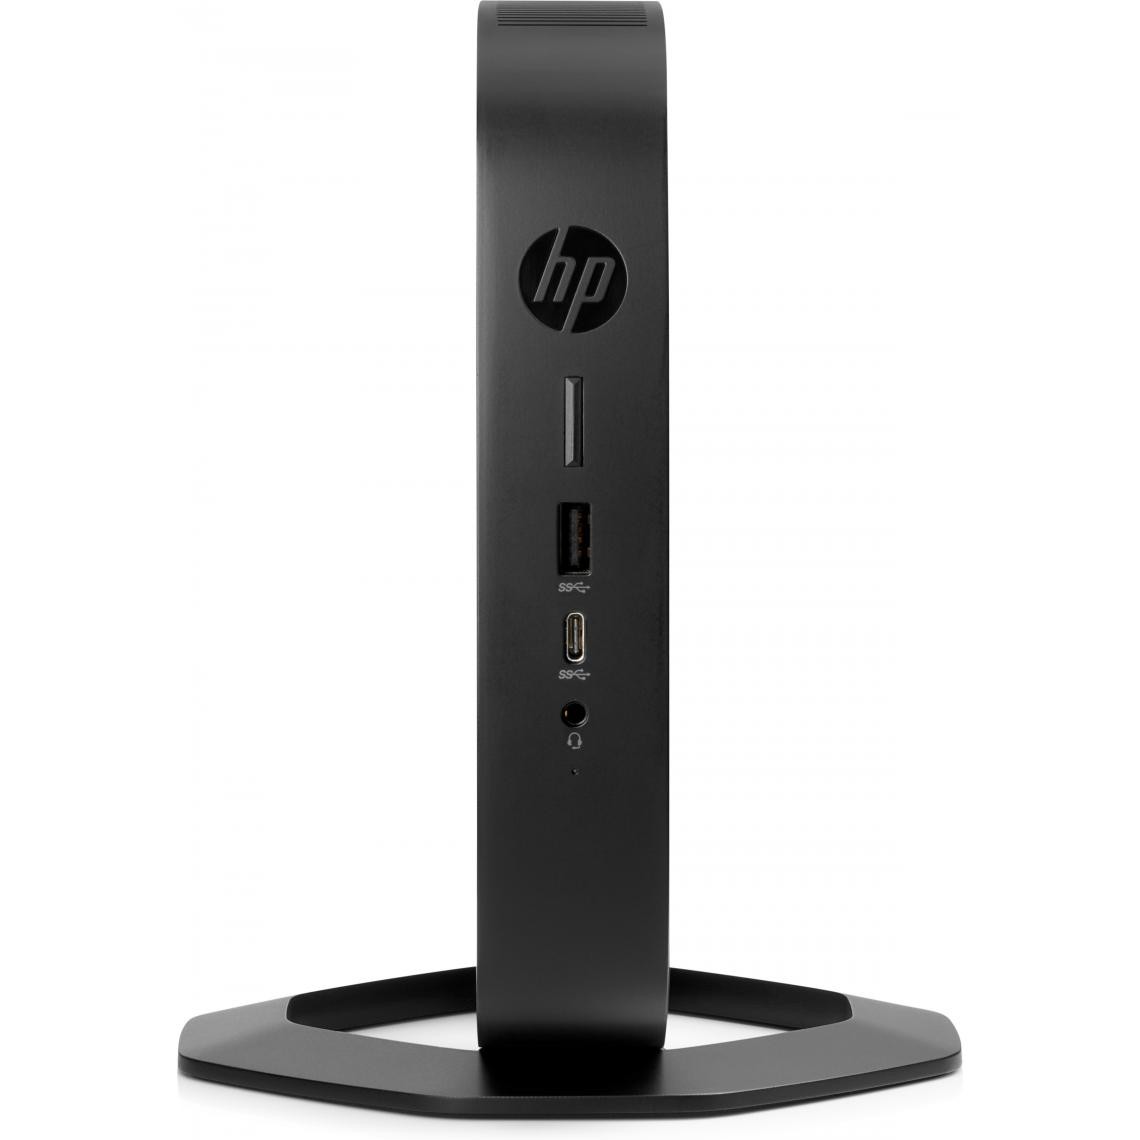 Hp - HP t540 1,5 GHz ThinPro 1,4 kg Noir R1305G - PC Fixe